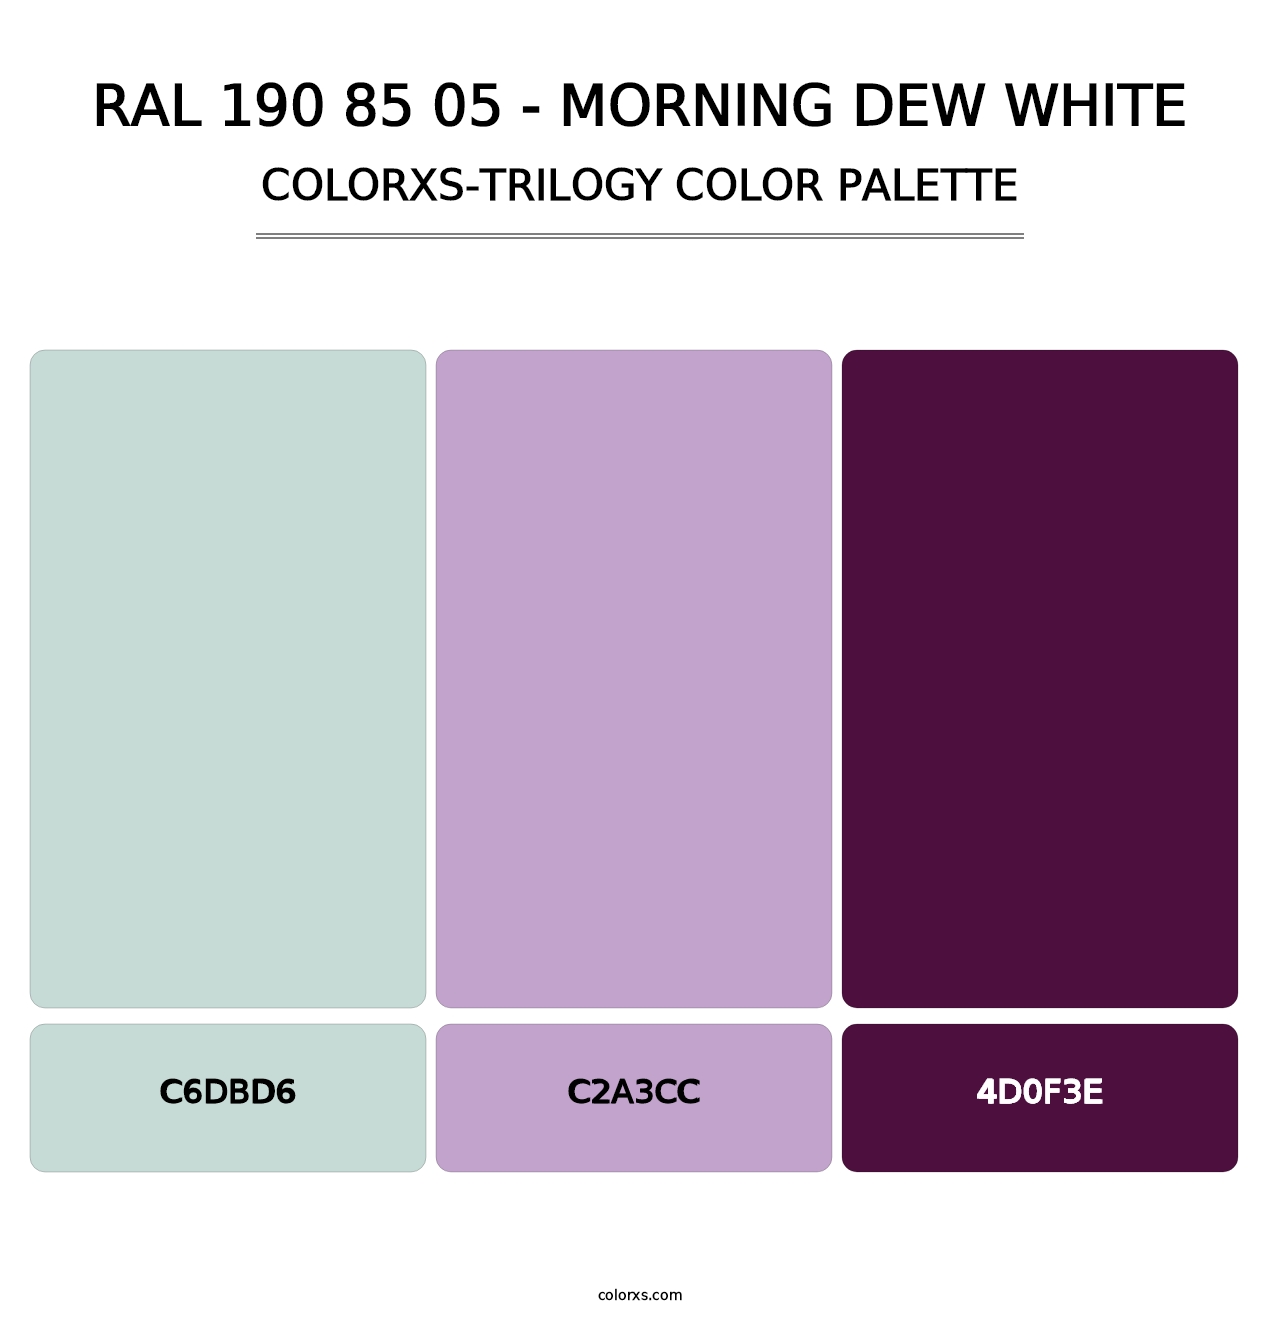 RAL 190 85 05 - Morning Dew White - Colorxs Trilogy Palette